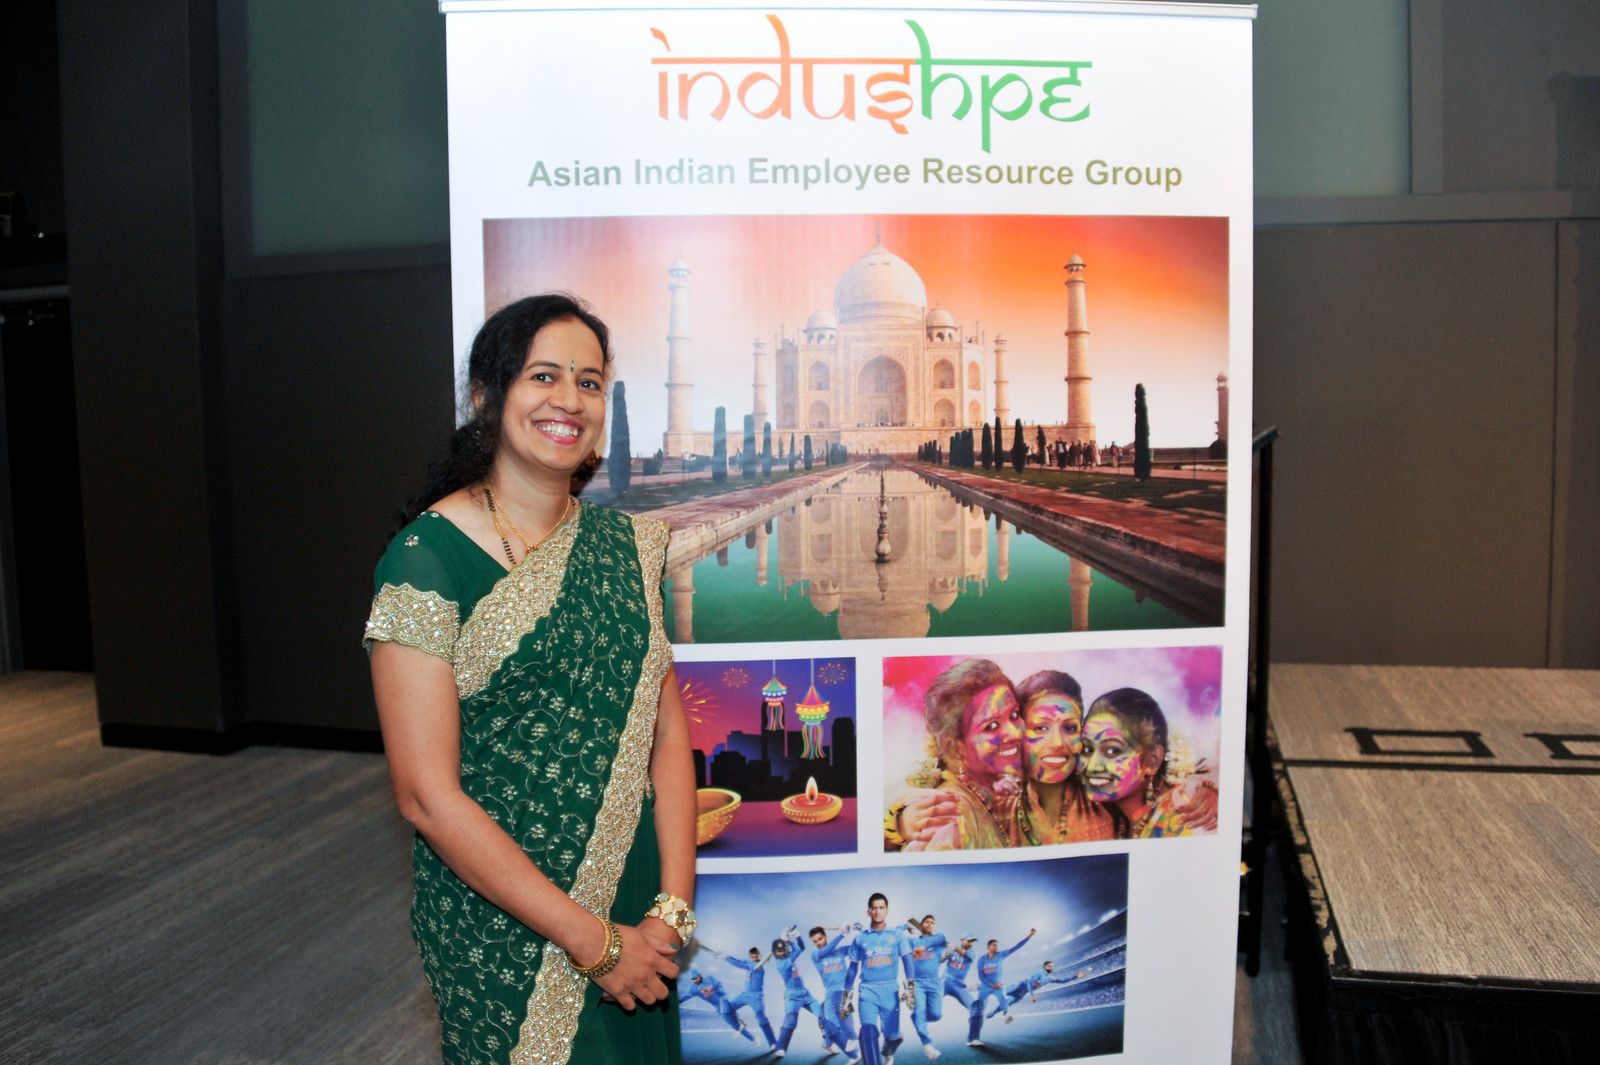 indushpe Asian Indian Employee Resource Group